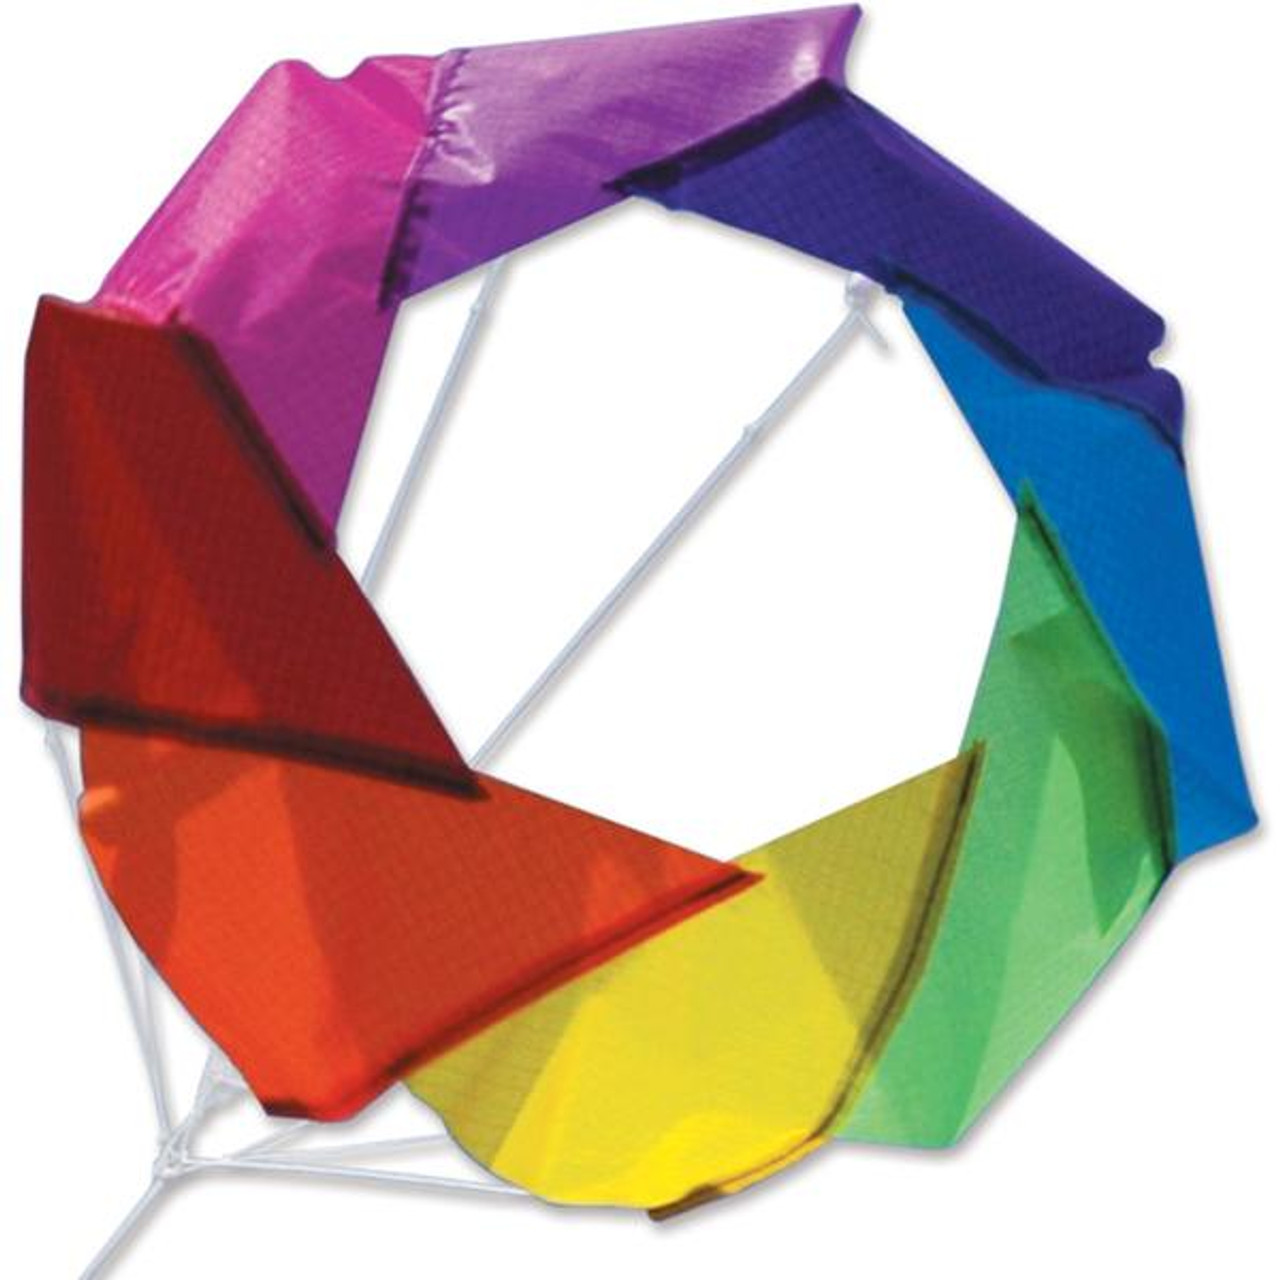 Rainbow Triple Wheel Spinner (Bold Innovations)